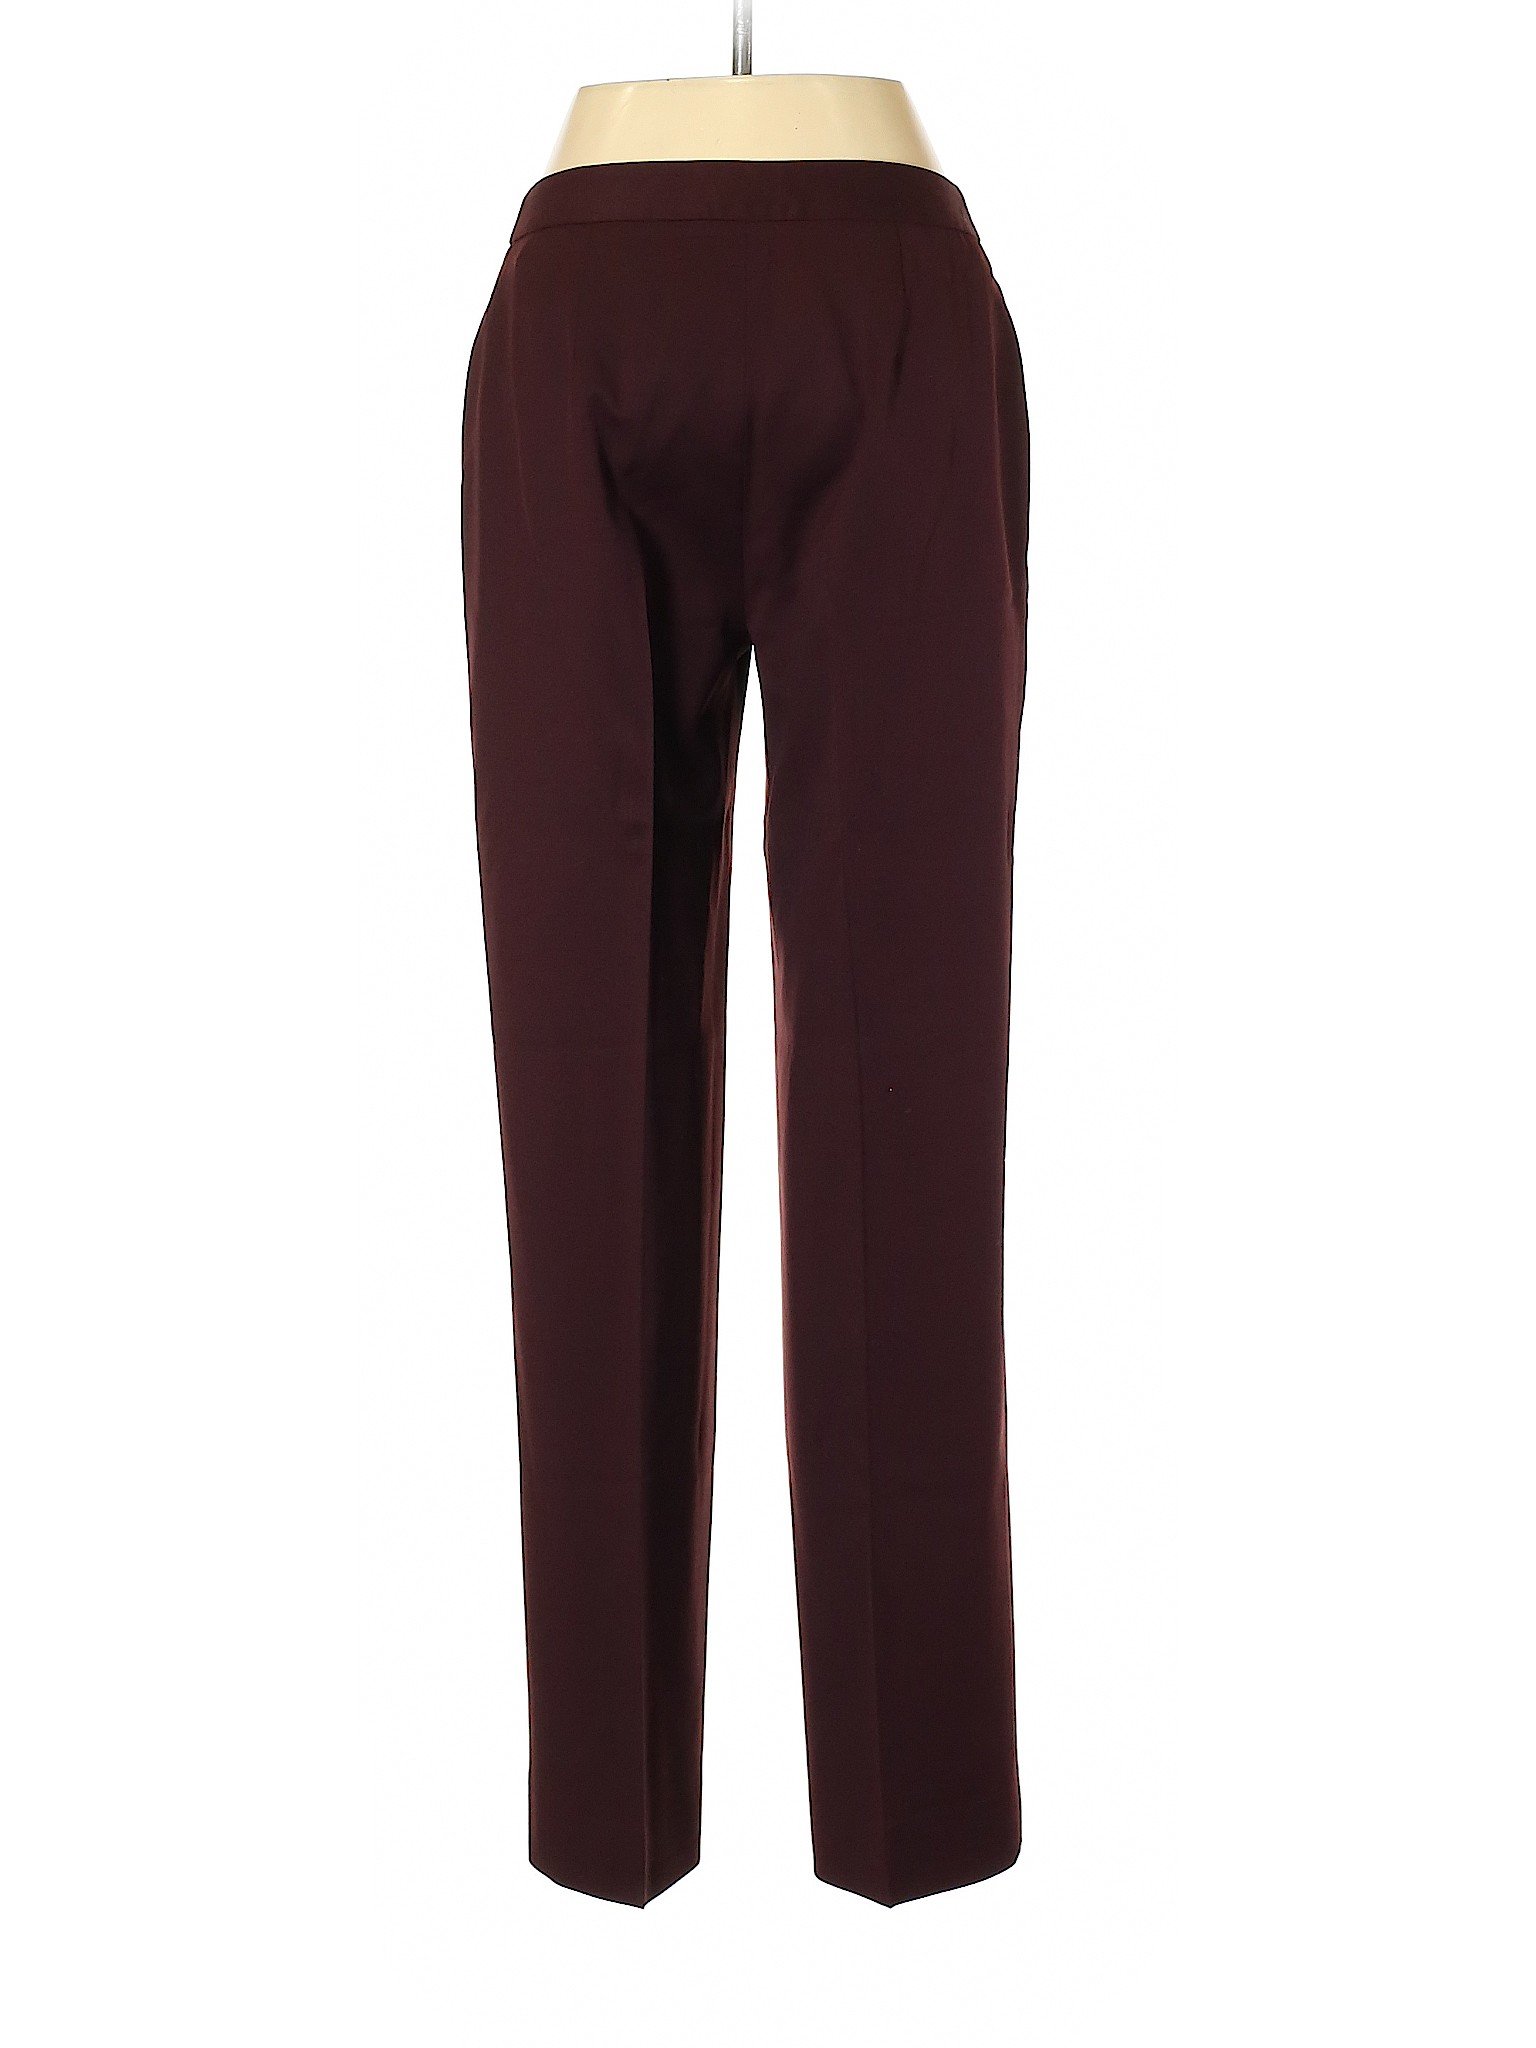 INC International Concepts Women Red Wool Pants 6 | eBay